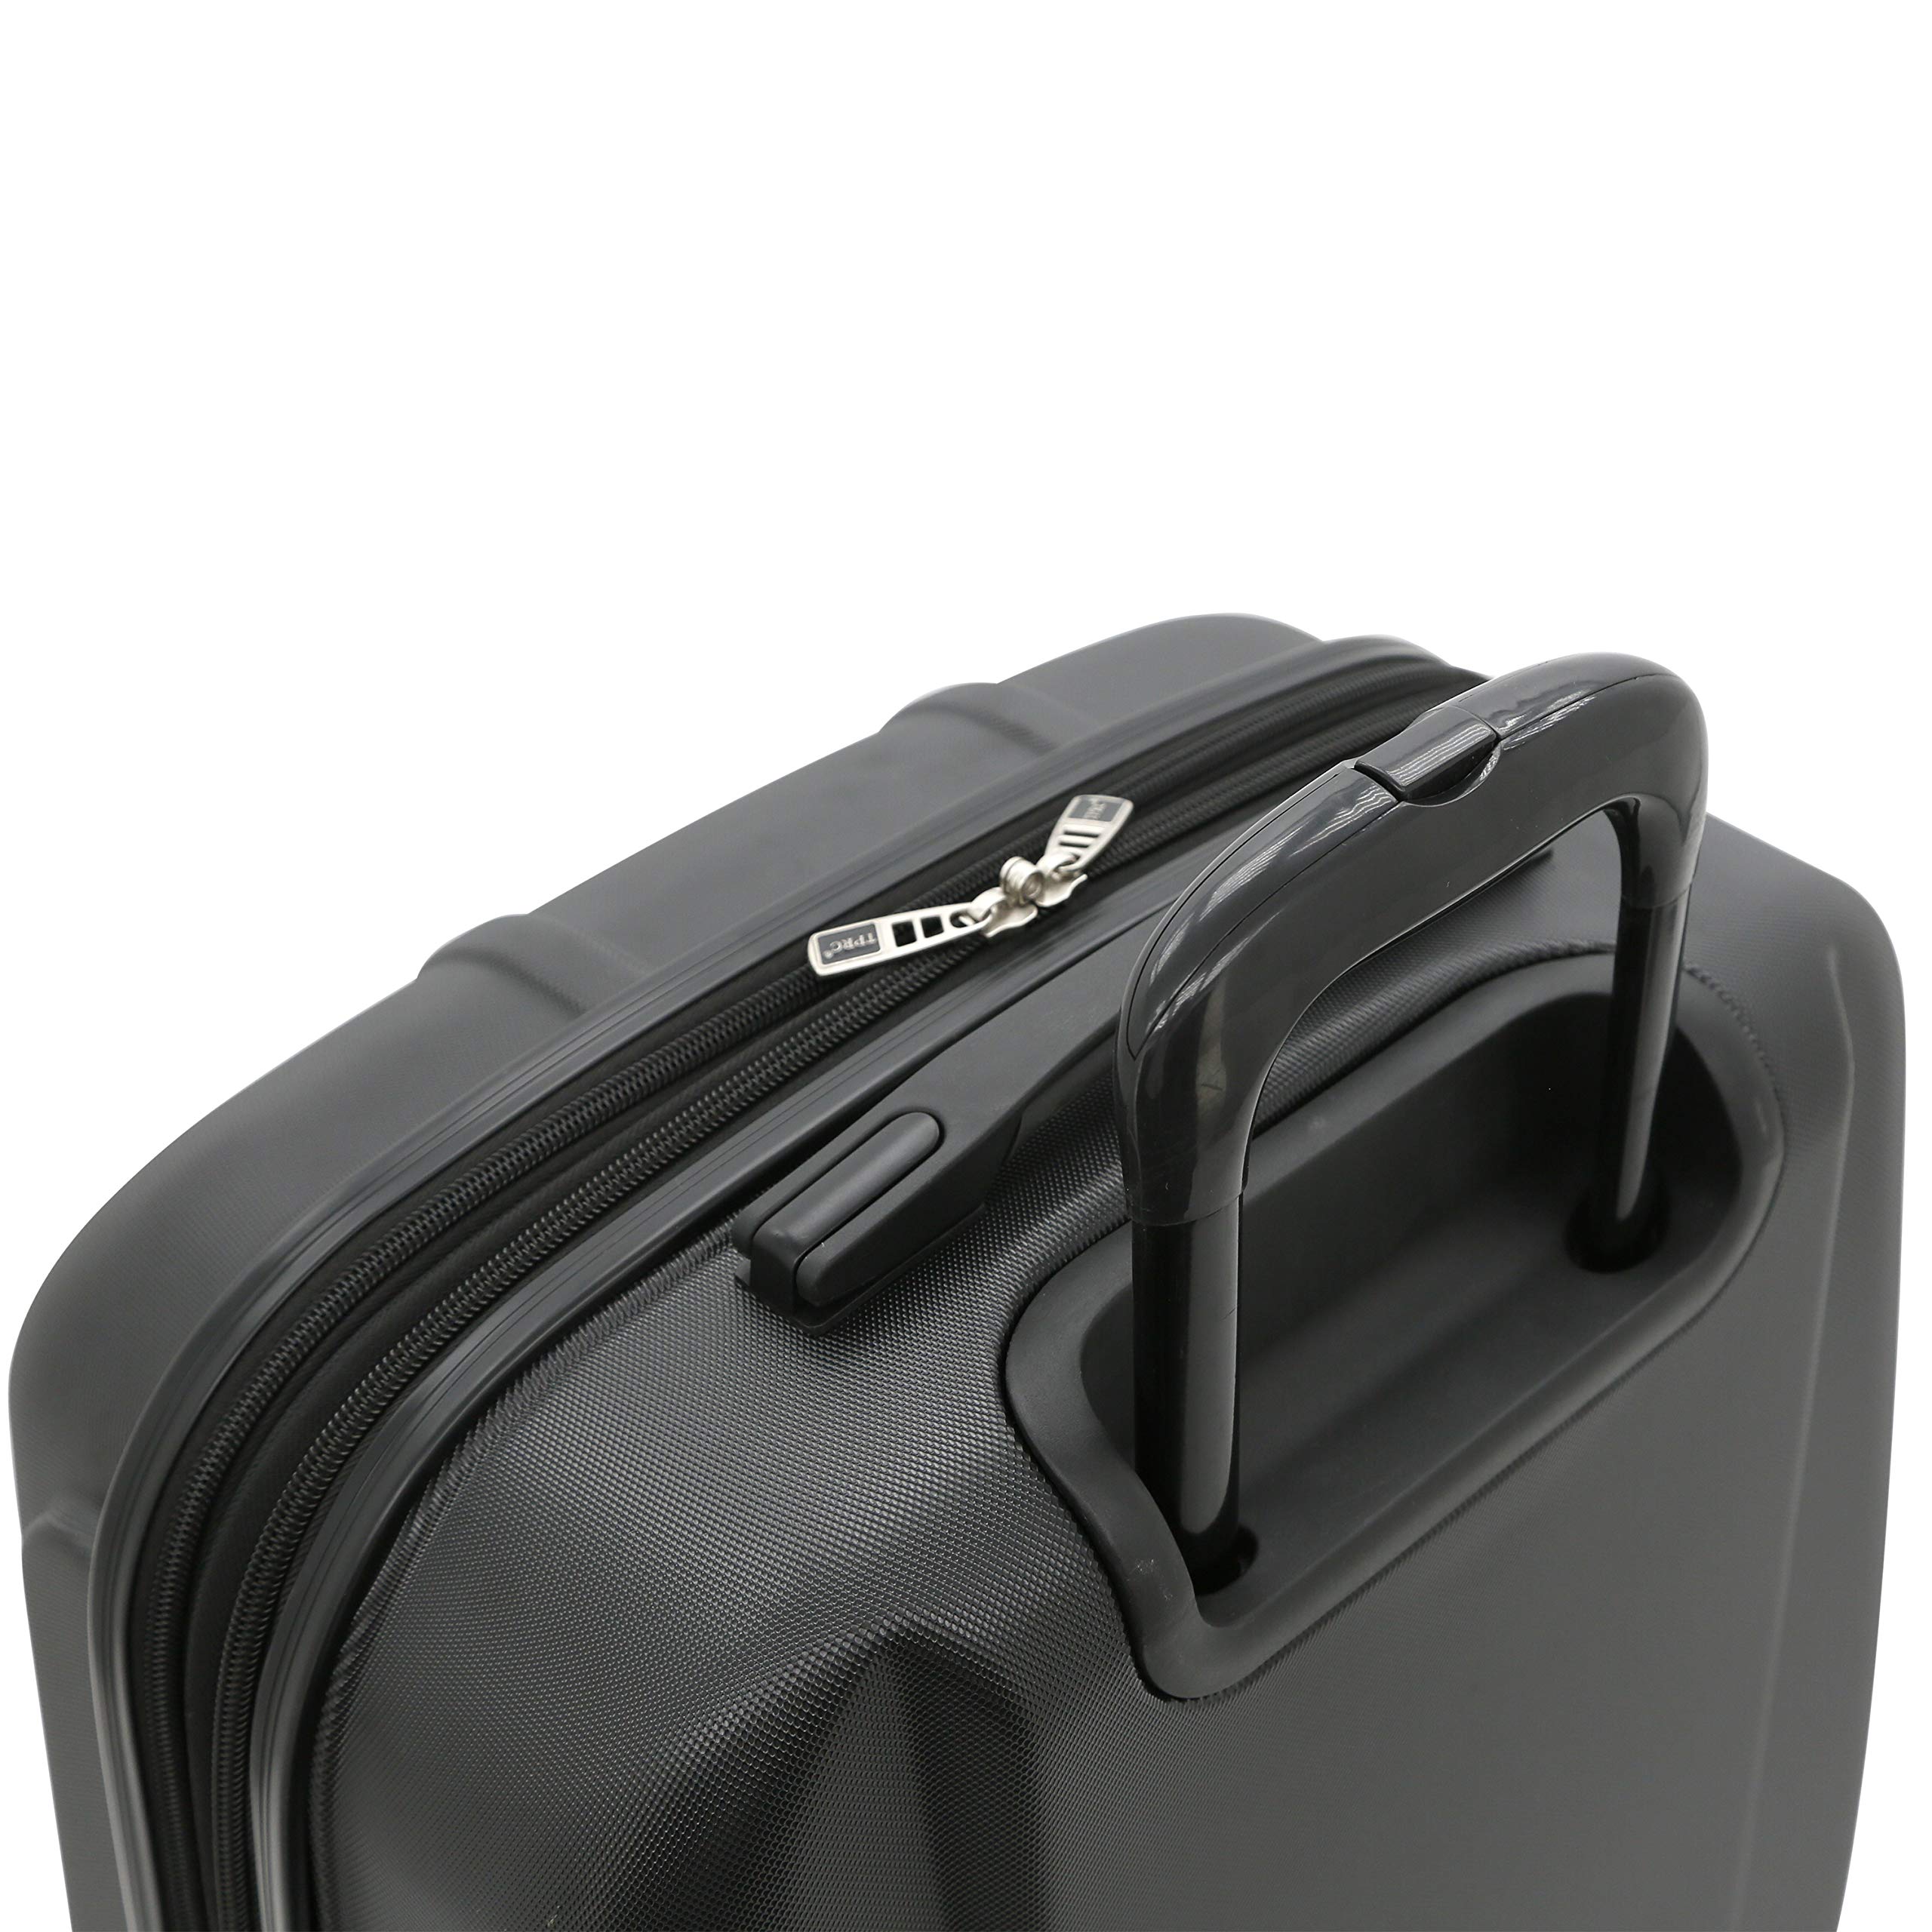 TPRC Falkirk Hardside Expandable Spinner Luggage, Midnight Black, 3-Piece Set (20/24/28)